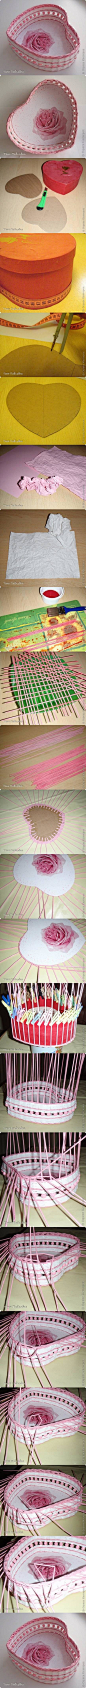 DIY Heart Paper Basket DIY Projects | UsefulDIY.com